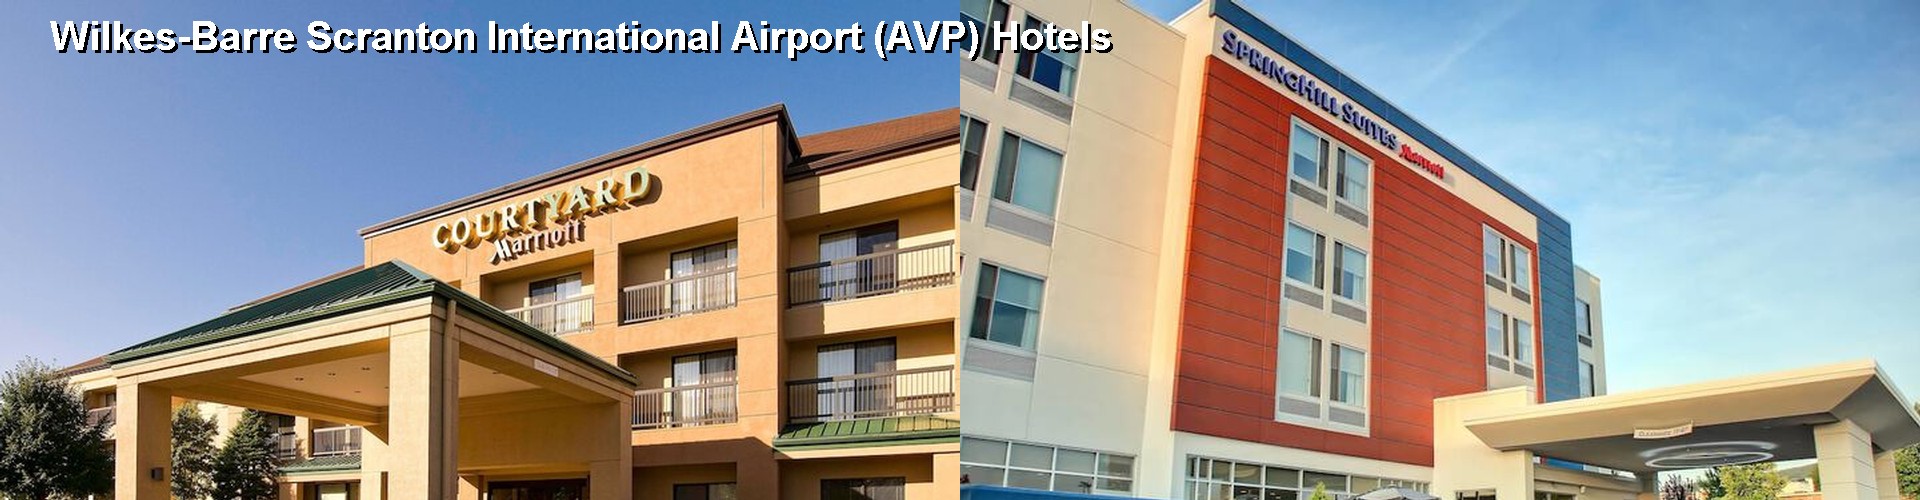 5 Best Hotels near Wilkes-Barre Scranton International Airport (AVP)